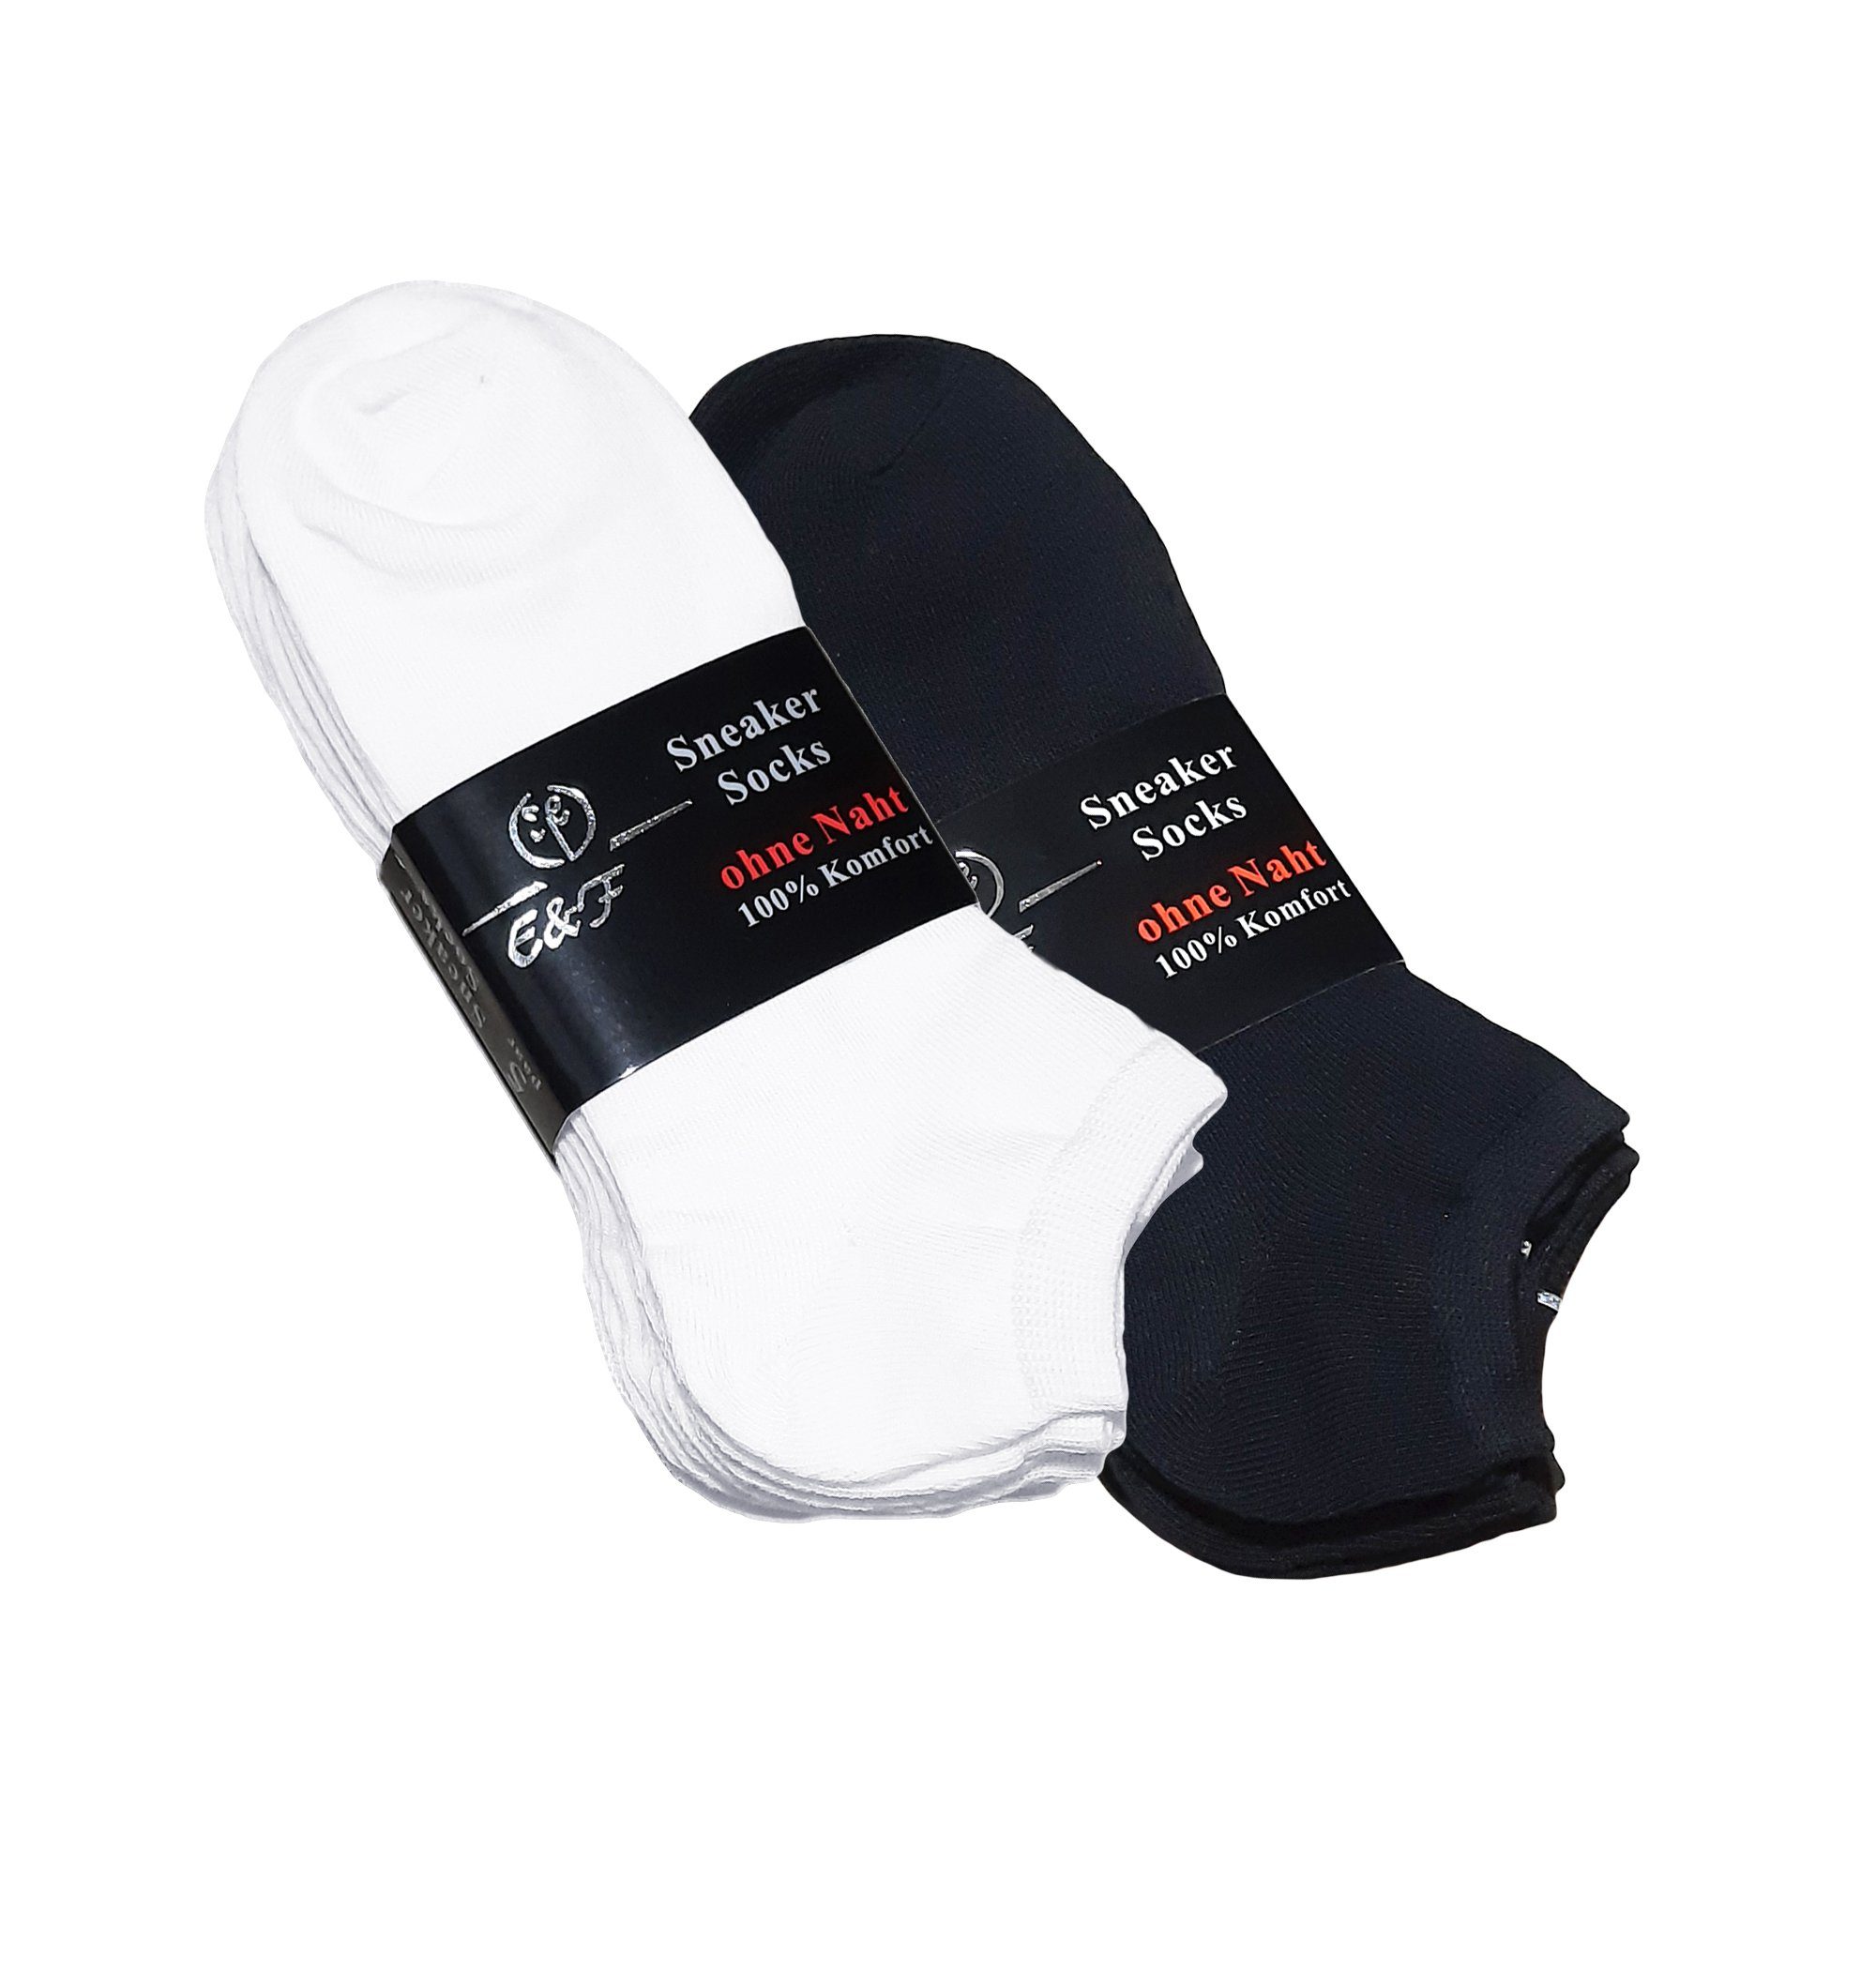 Sockenhimmel Sneakersocken Socken für Damen leichte Sommersocken kurze Sportsocken in Basic Farben (10 Paar) maschinengekettelte Naht (sehr flach) Mix (Schwarz/Weiß)